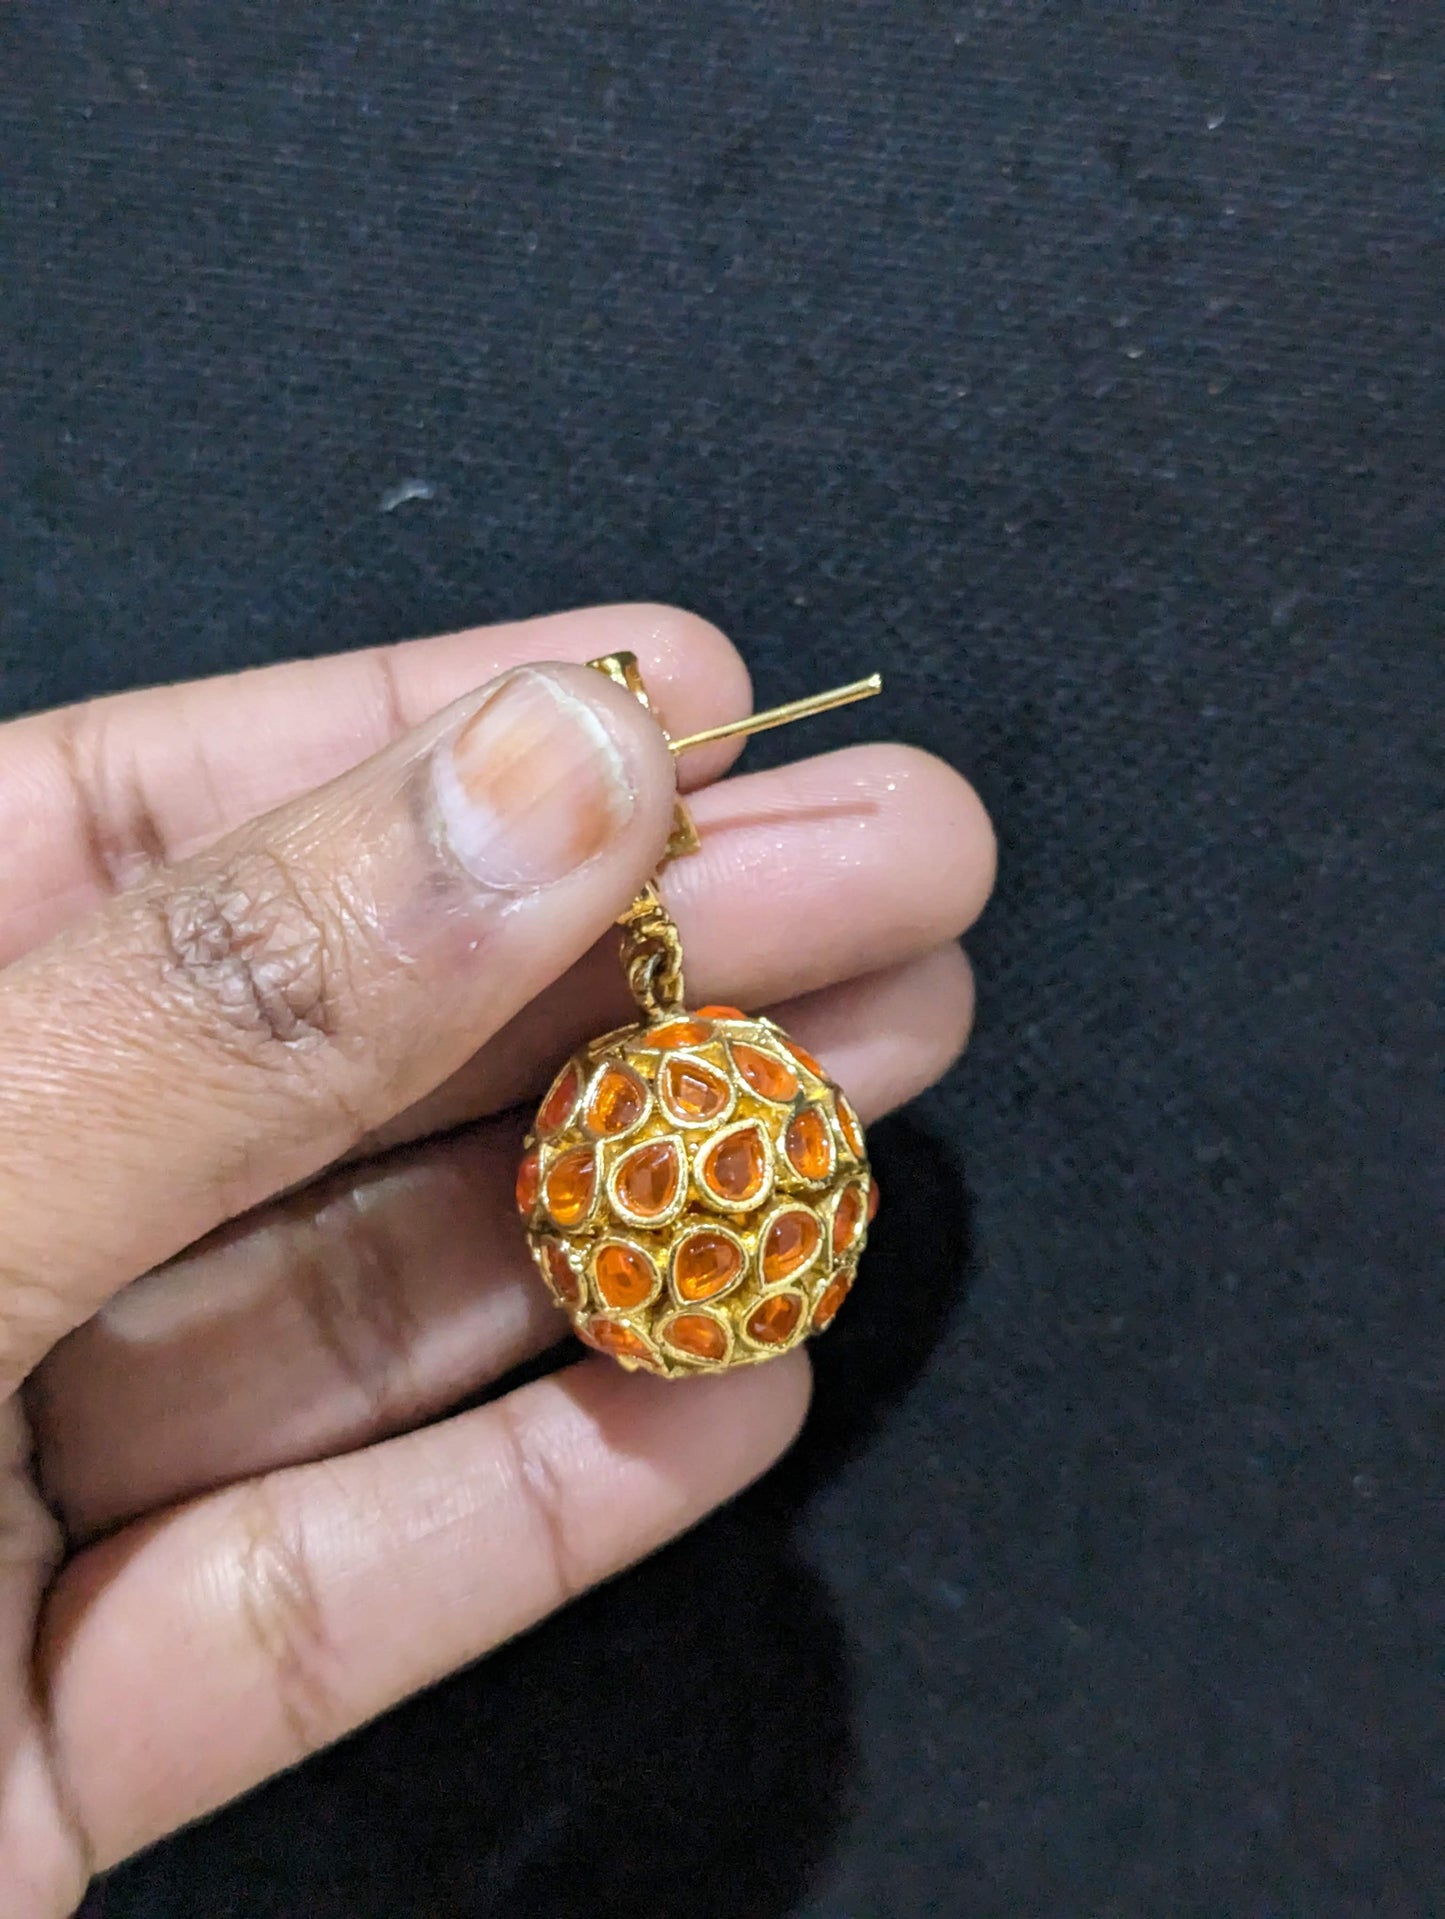 Gold plated ball jhumka earrings